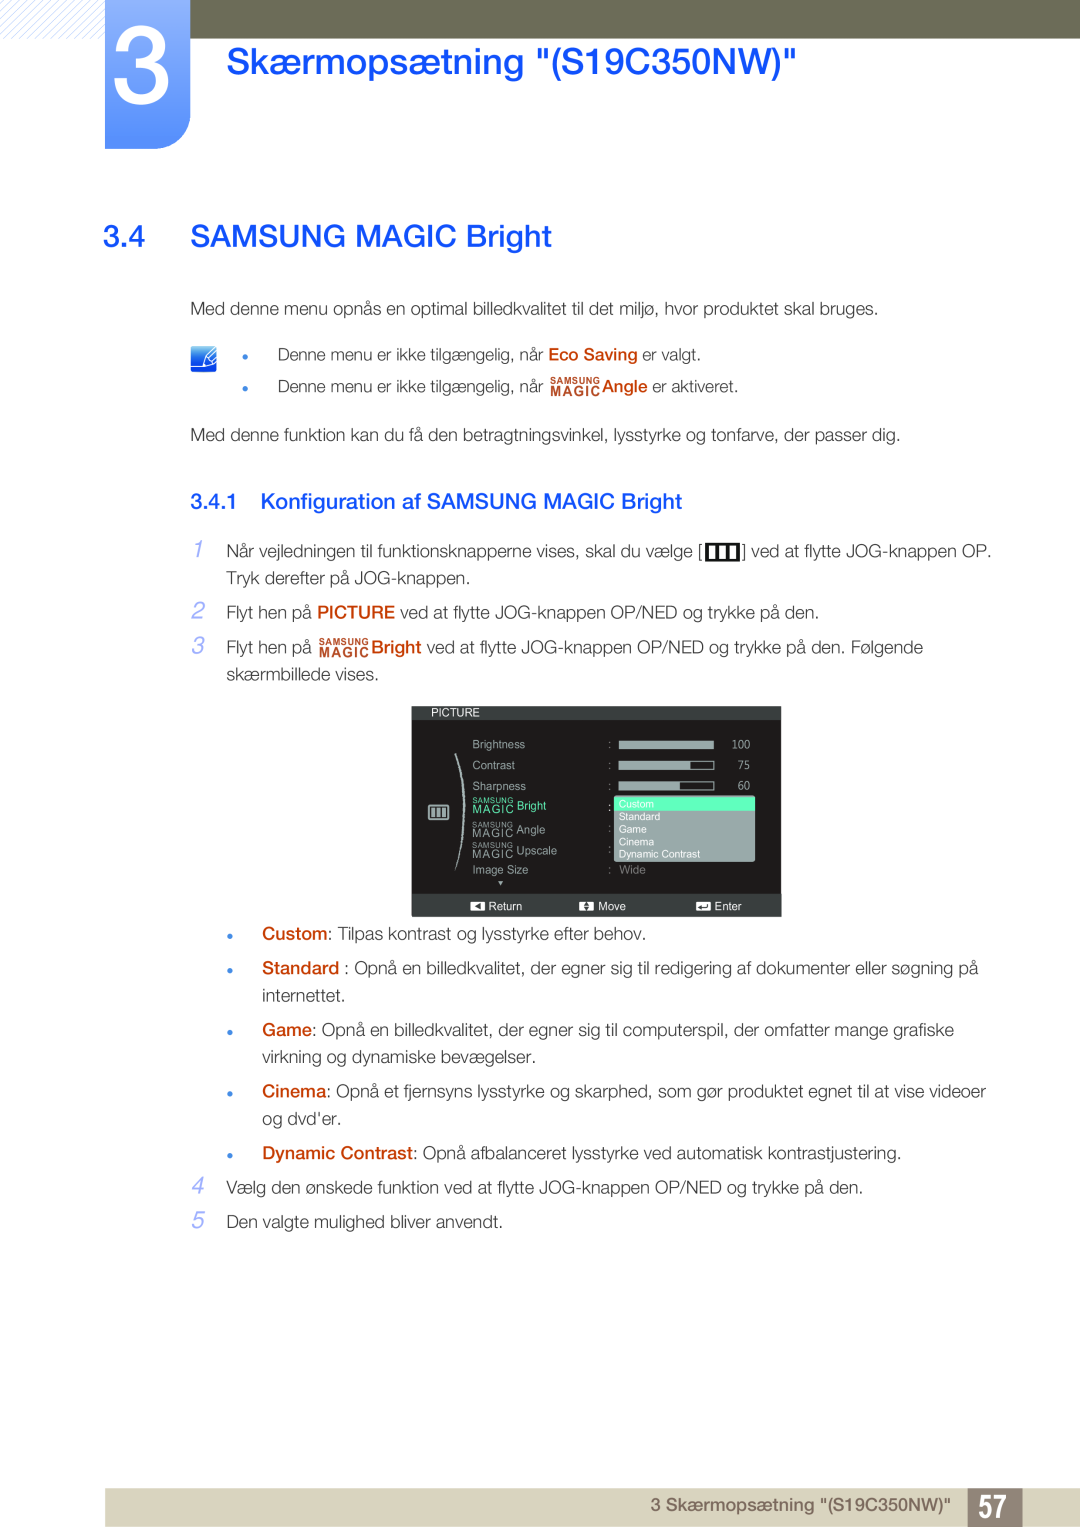 Samsung LS24C350HS/EN, LS22C350HS/EN, LS23C350HS/EN Konfiguration af SAMSUNG MAGIC Bright, 3 Skærmopsætning S19C350NW 